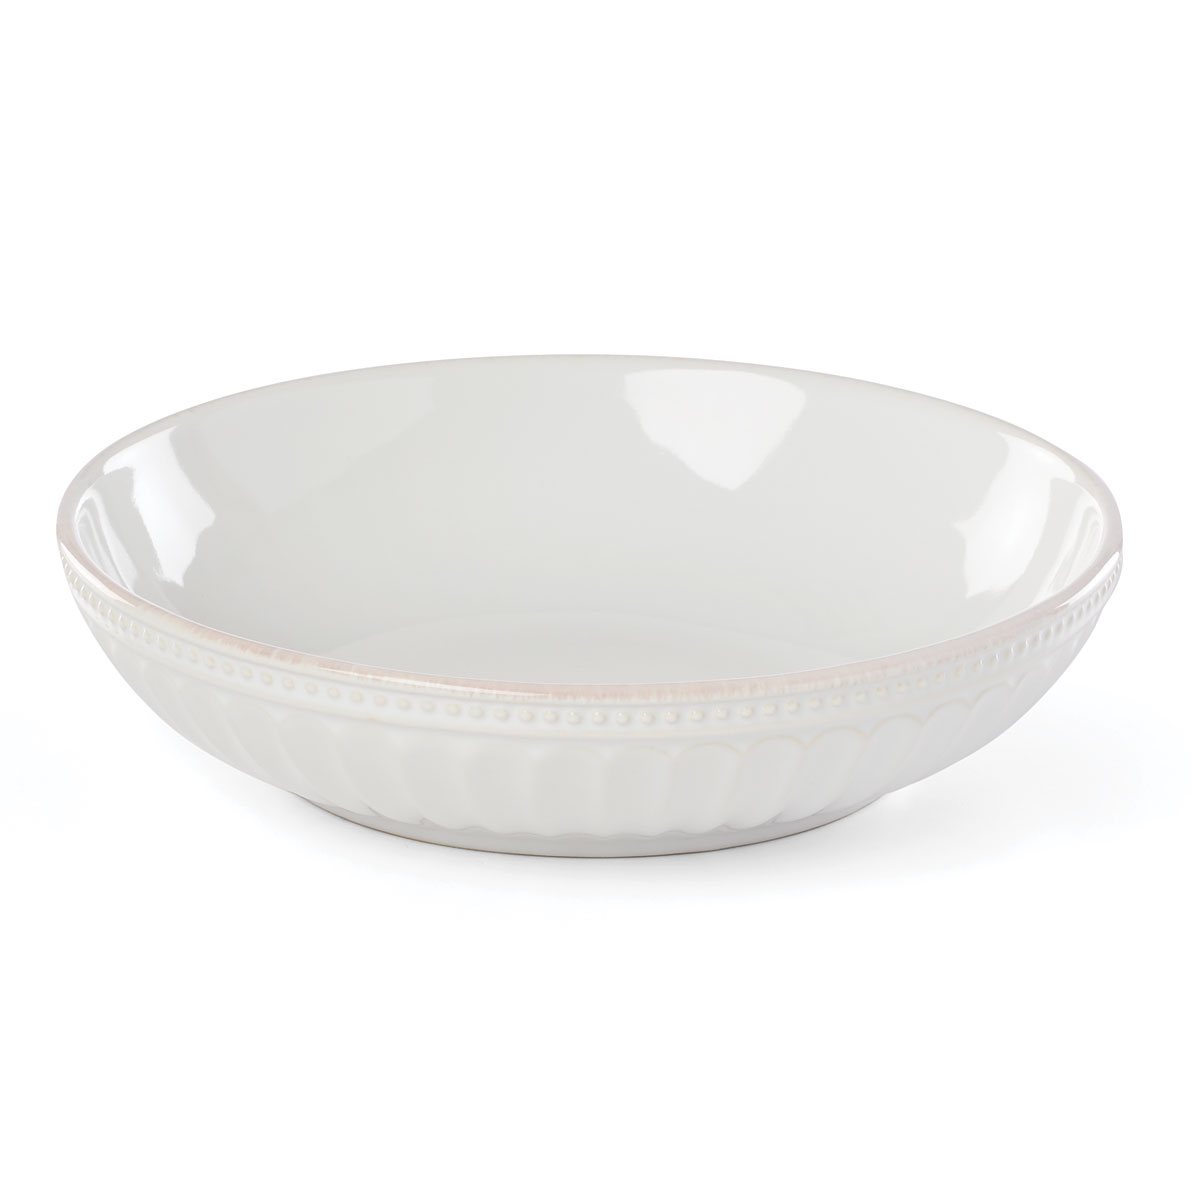 Lenox French Perle Groove White Dinnerware Pasta Bowl, Single